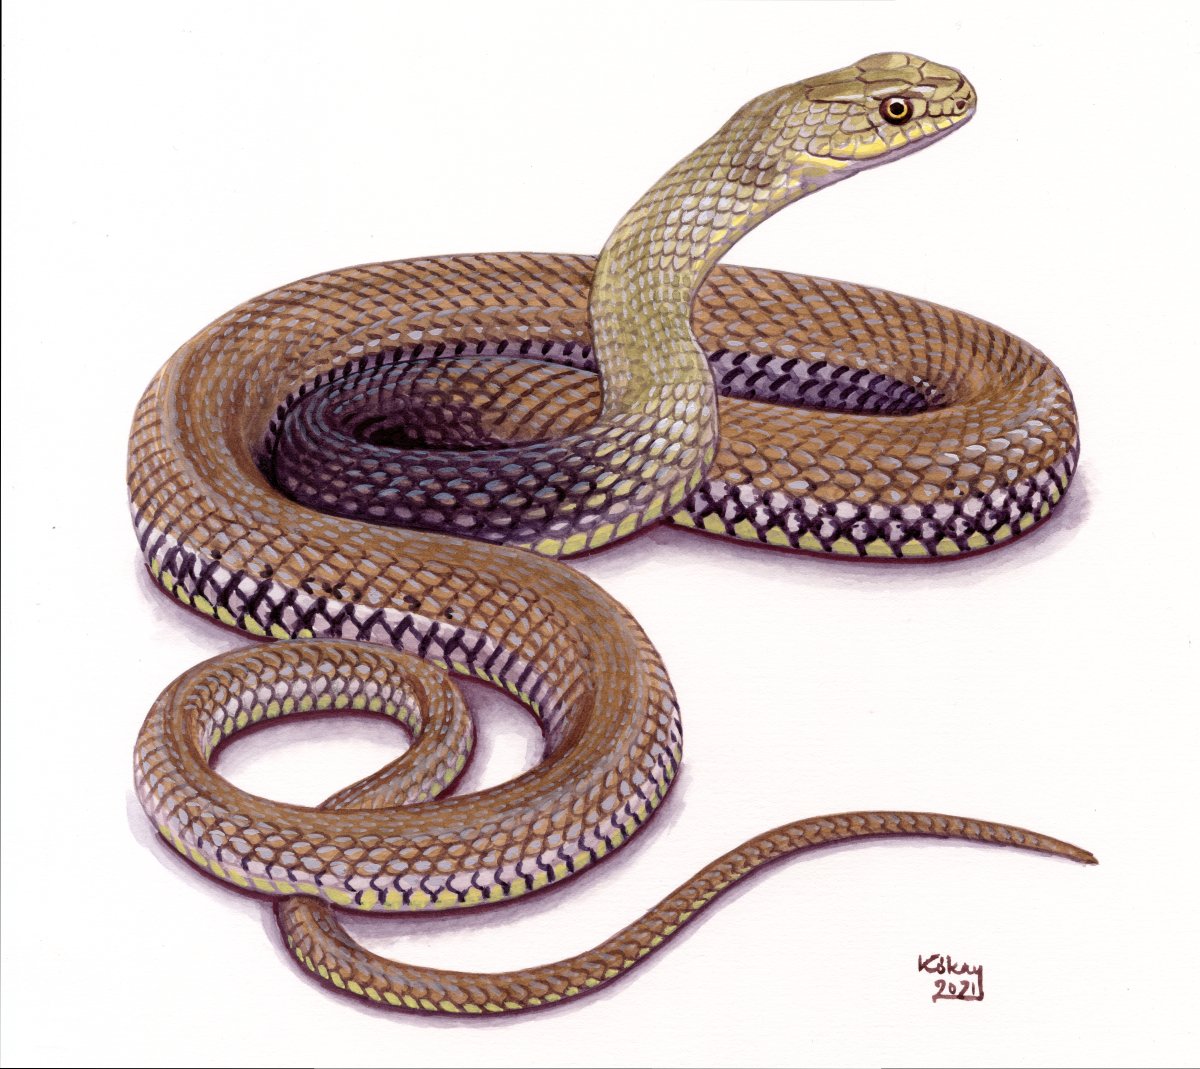 Montpellier Snake (Malpolon monspessulanus), watercolour and bodycolour on paper